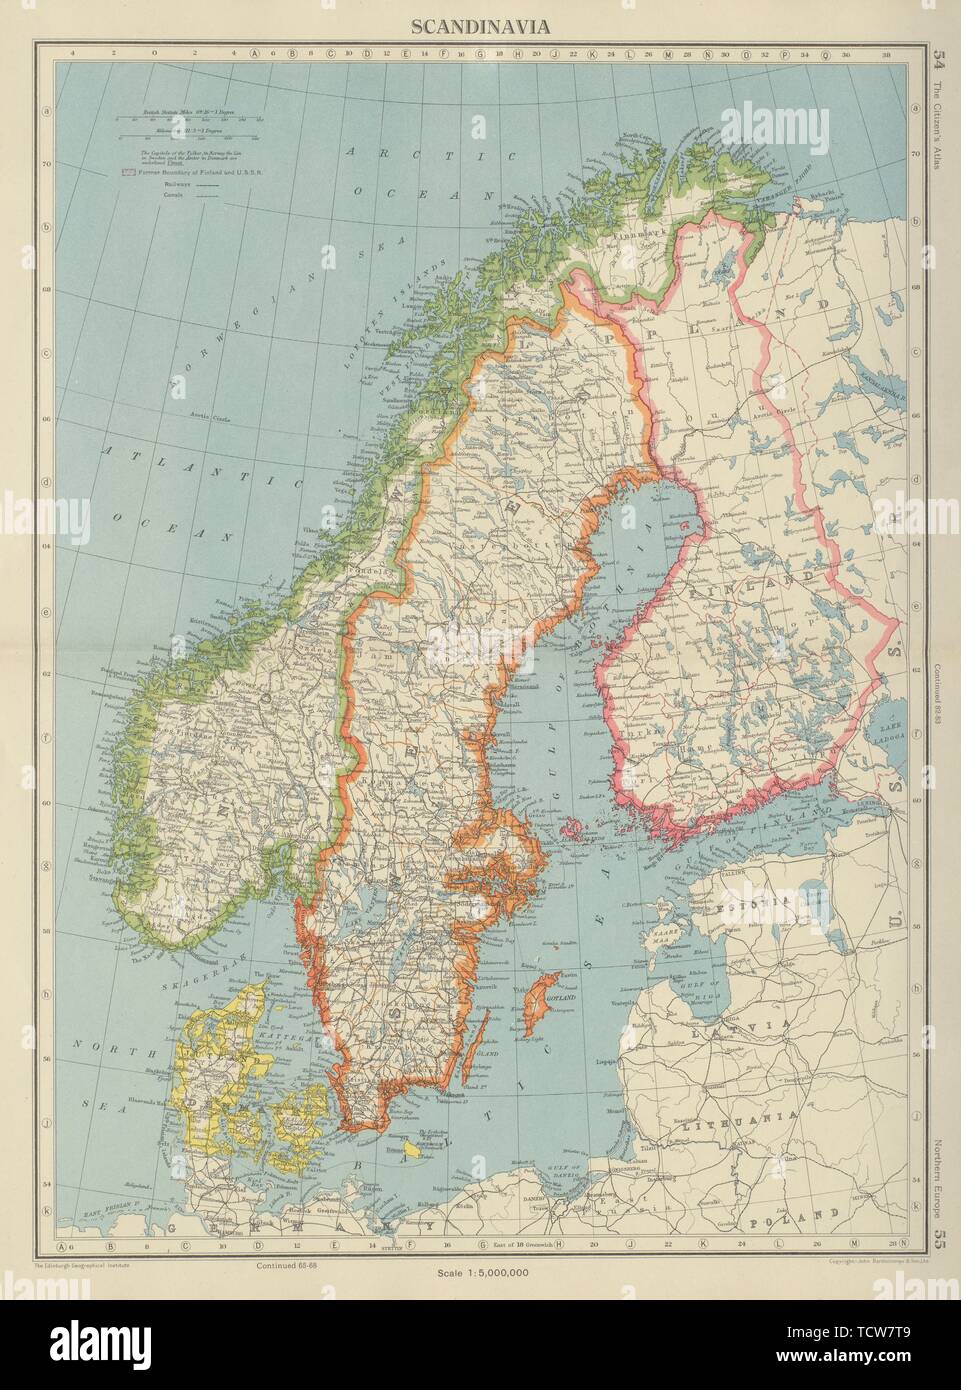 SCANDINAVIA. Sweden Norway Denmark Finland (shows < 1940 borders)  1947 map Stock Photo